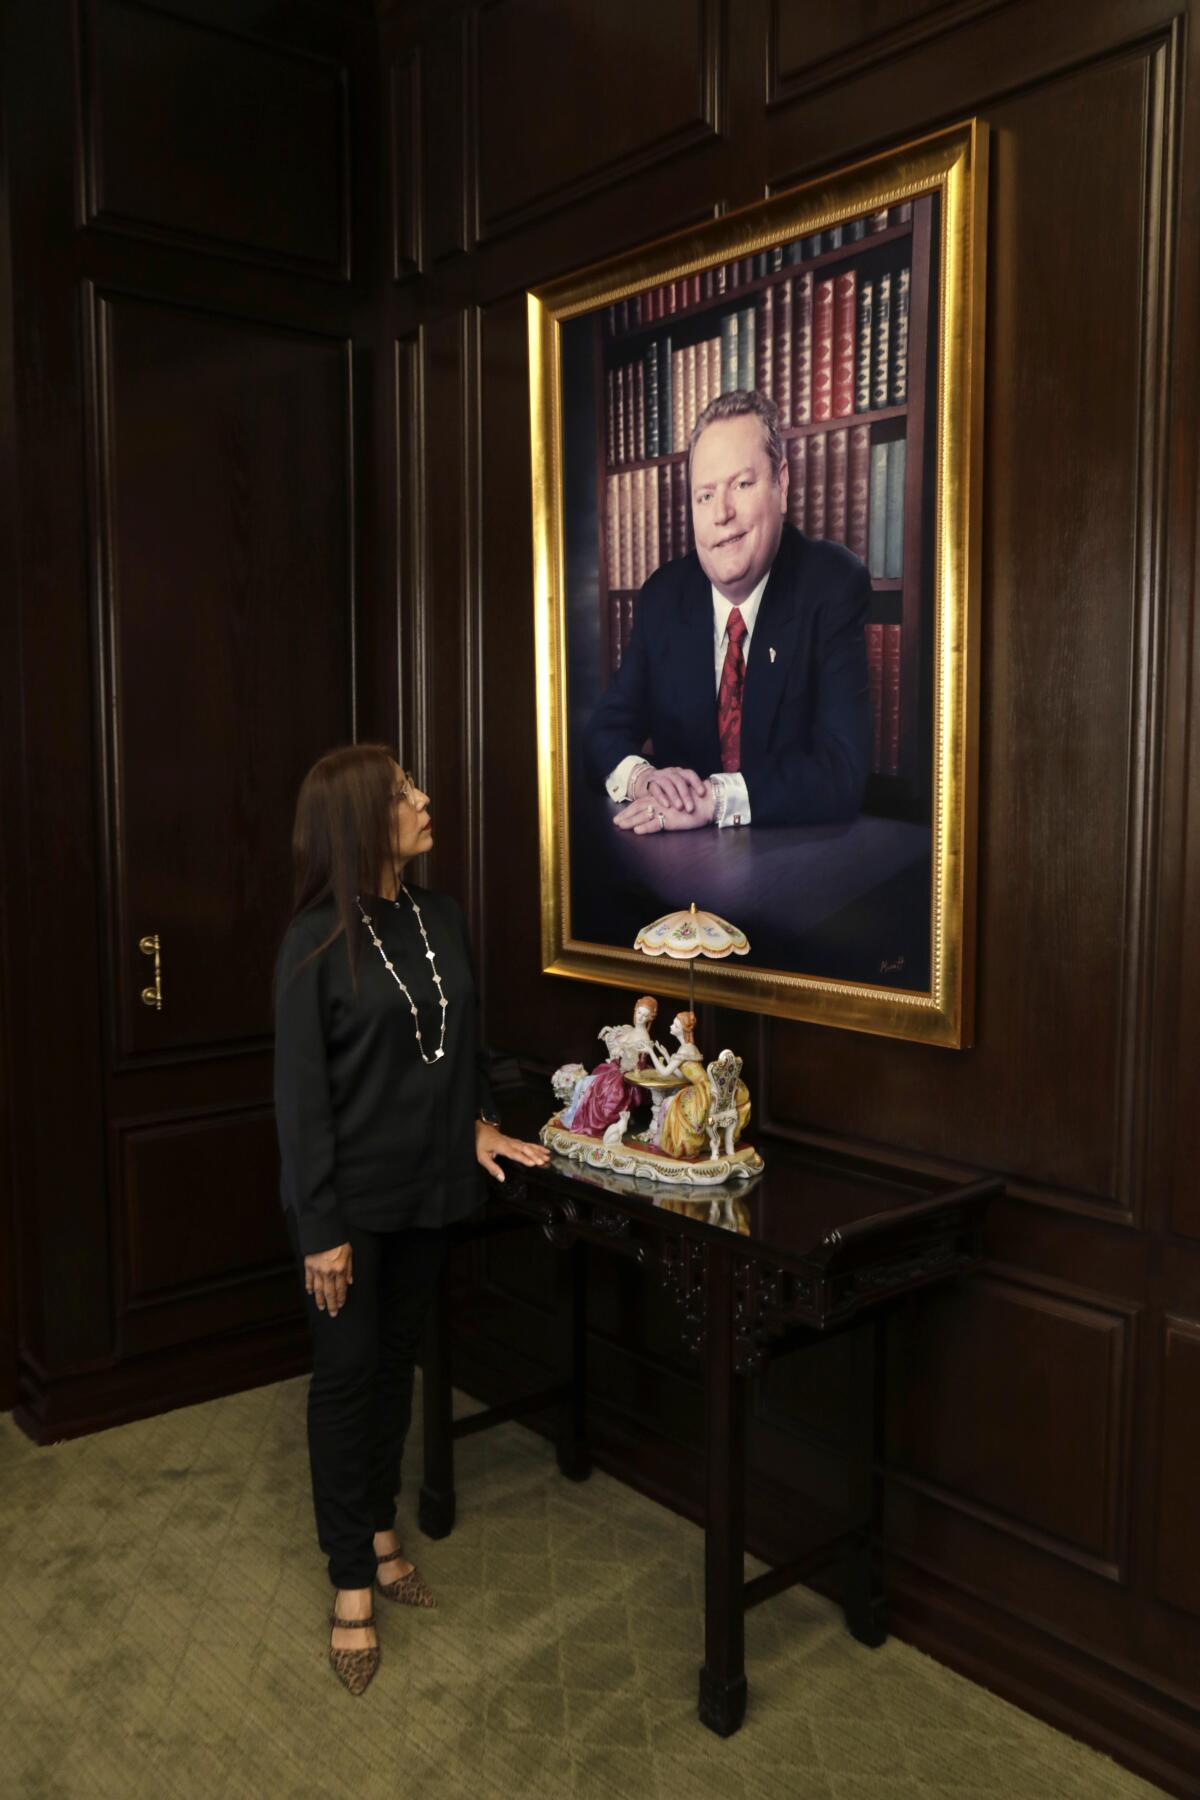 Liz Flynt looks up at a portrait of her late husband, Hustler publisher Larry Flynt, in her office in Beverly Hills.